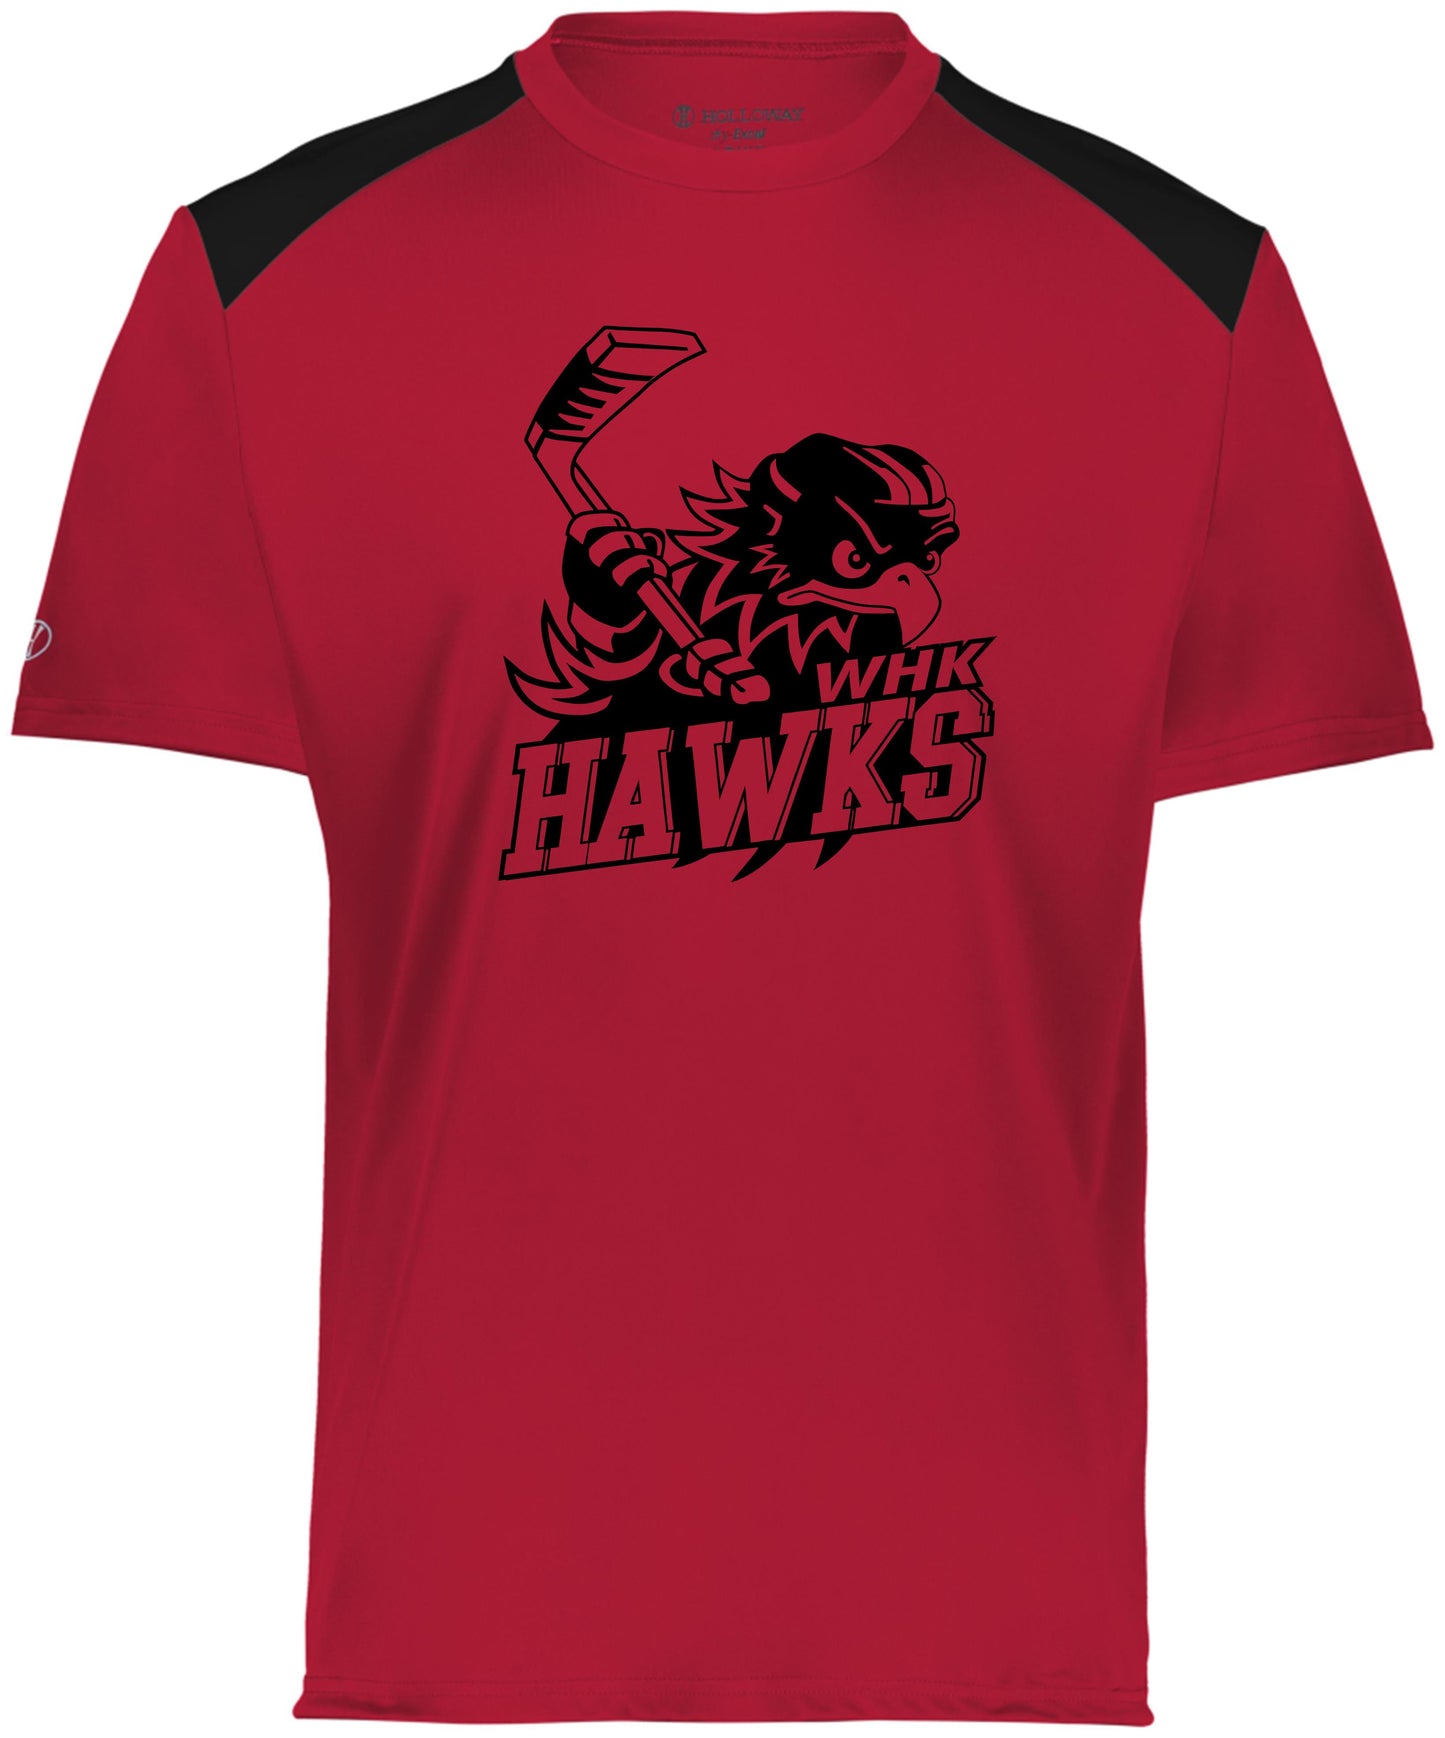 Hawks Short Sleeve Shirt